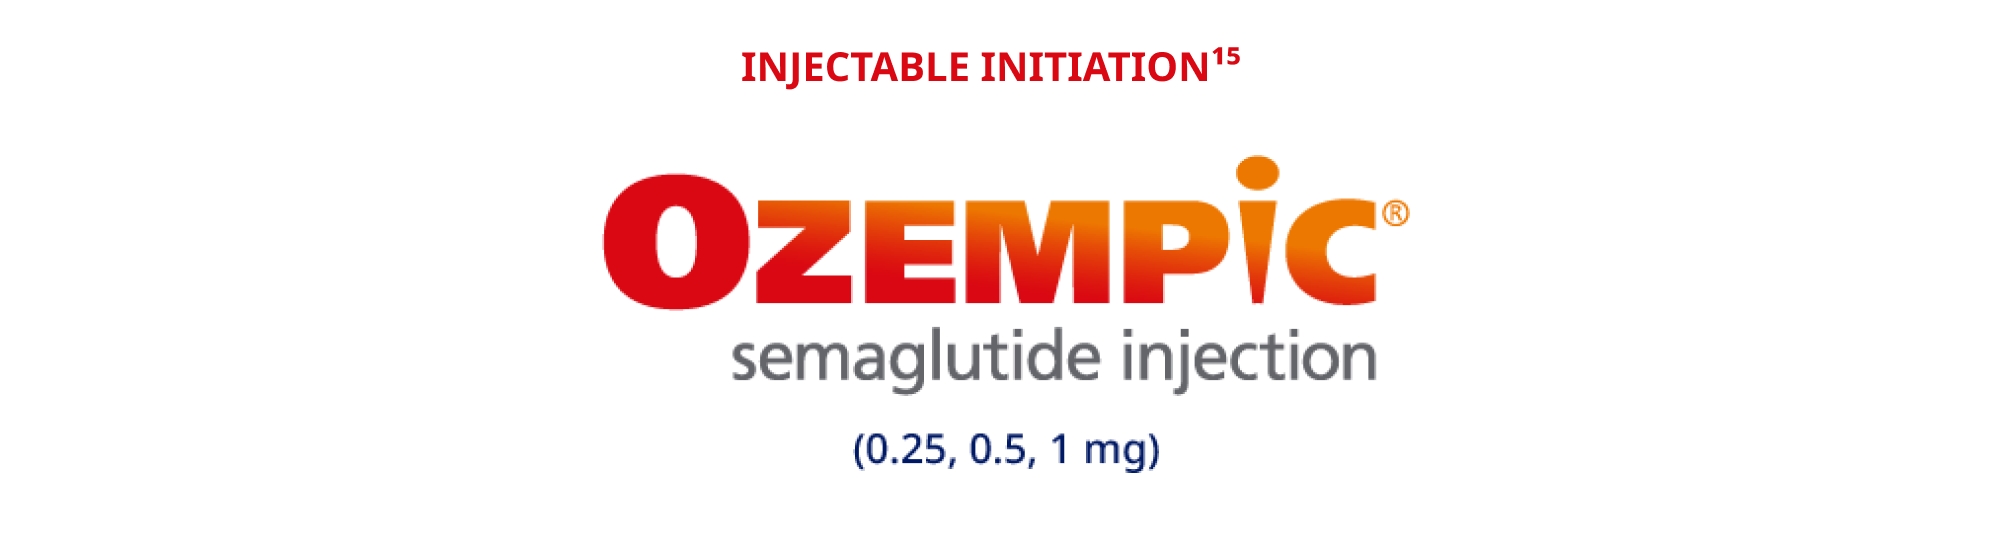 ozempic logo